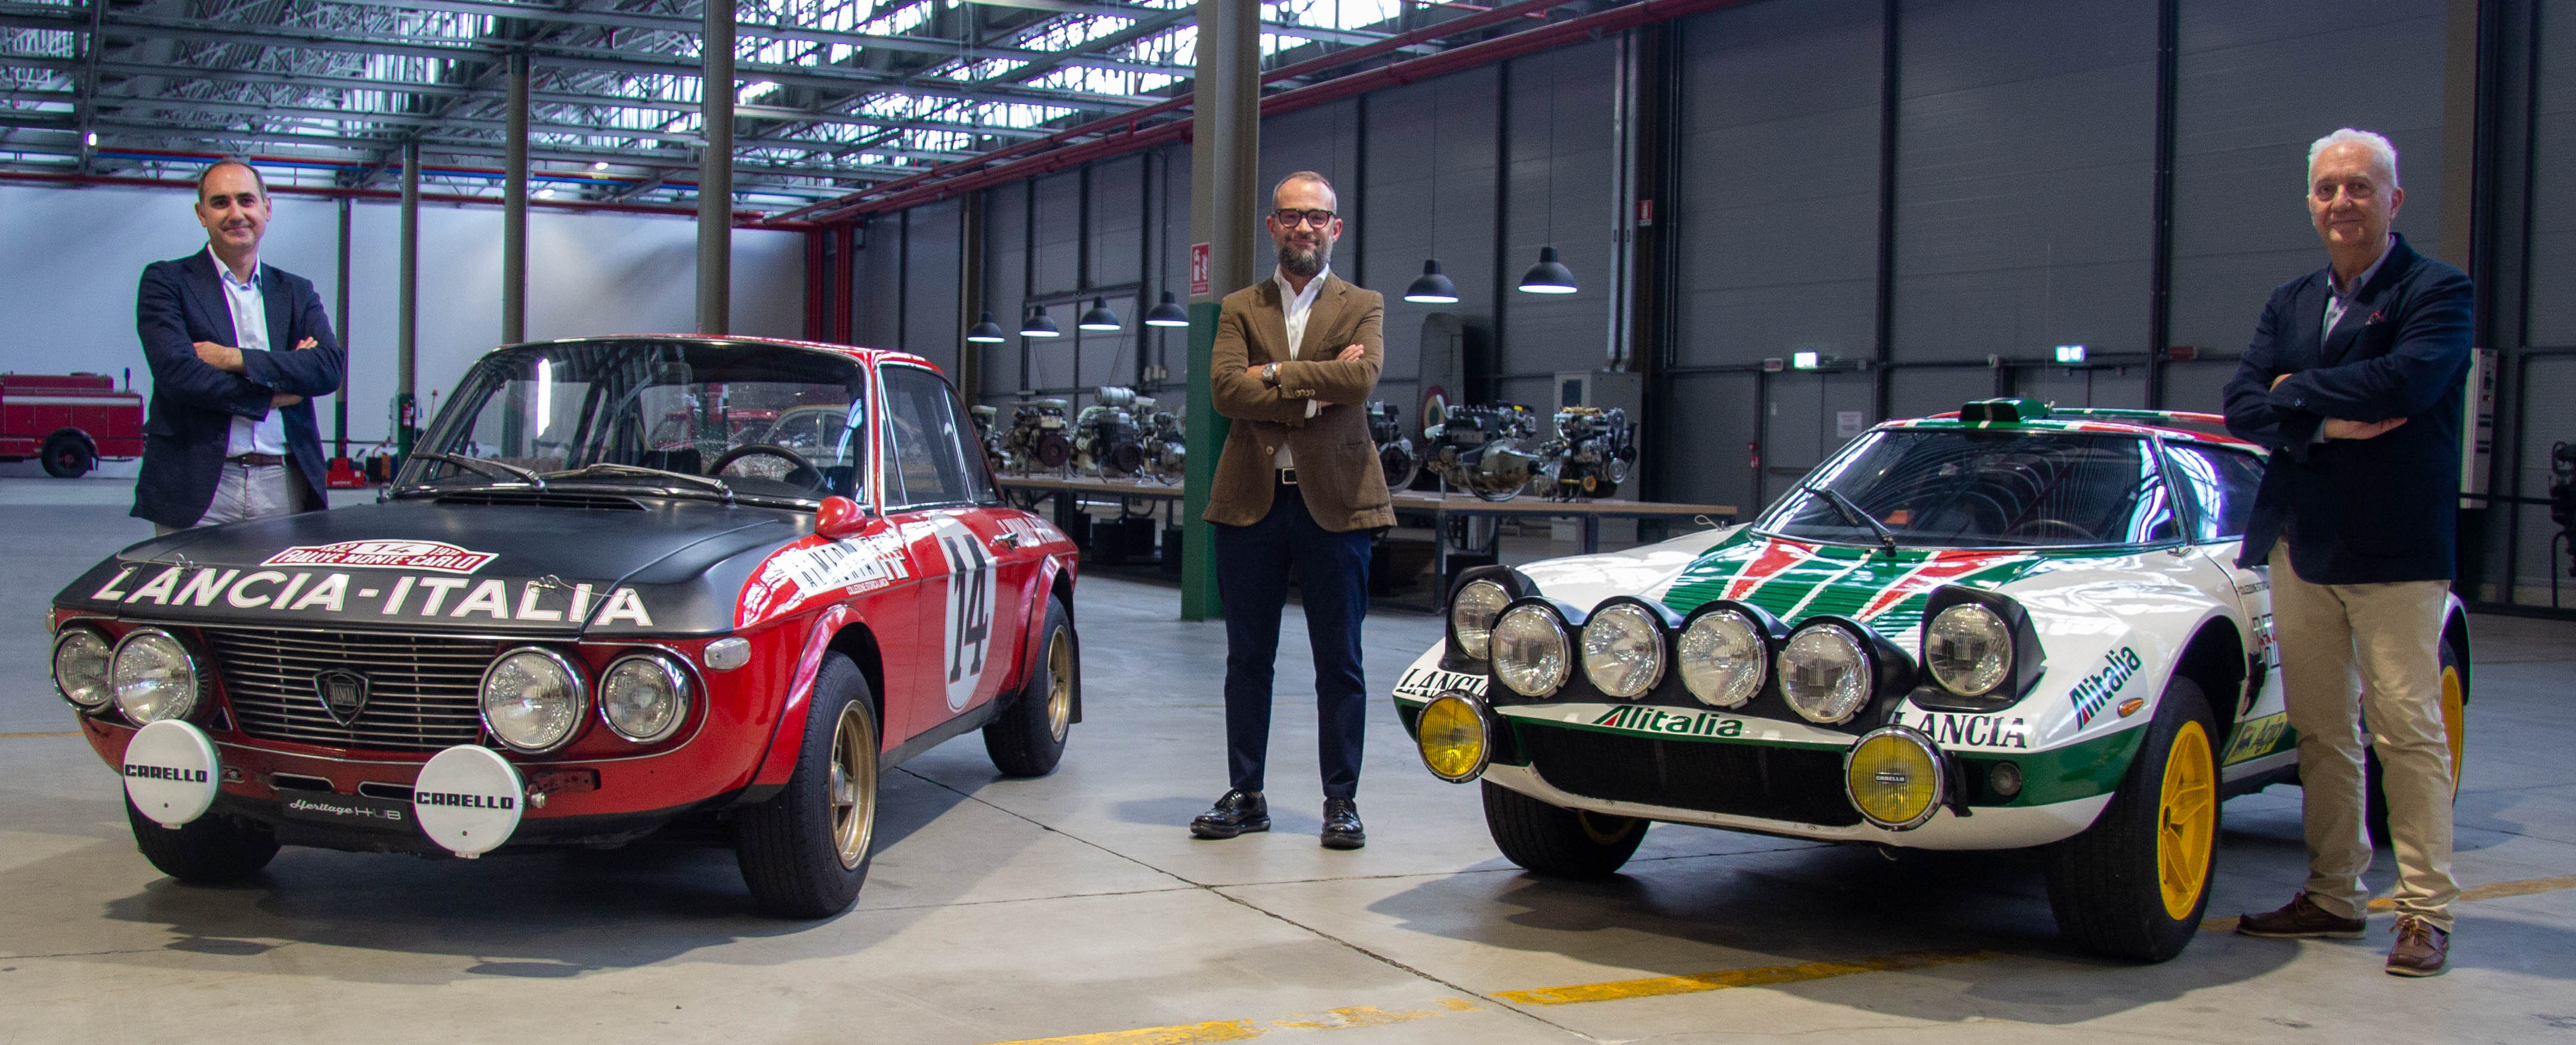 lancia_leyenda Premiere de la docuserie Sky Original, titulada “Lancia. La leyenda del Rally”